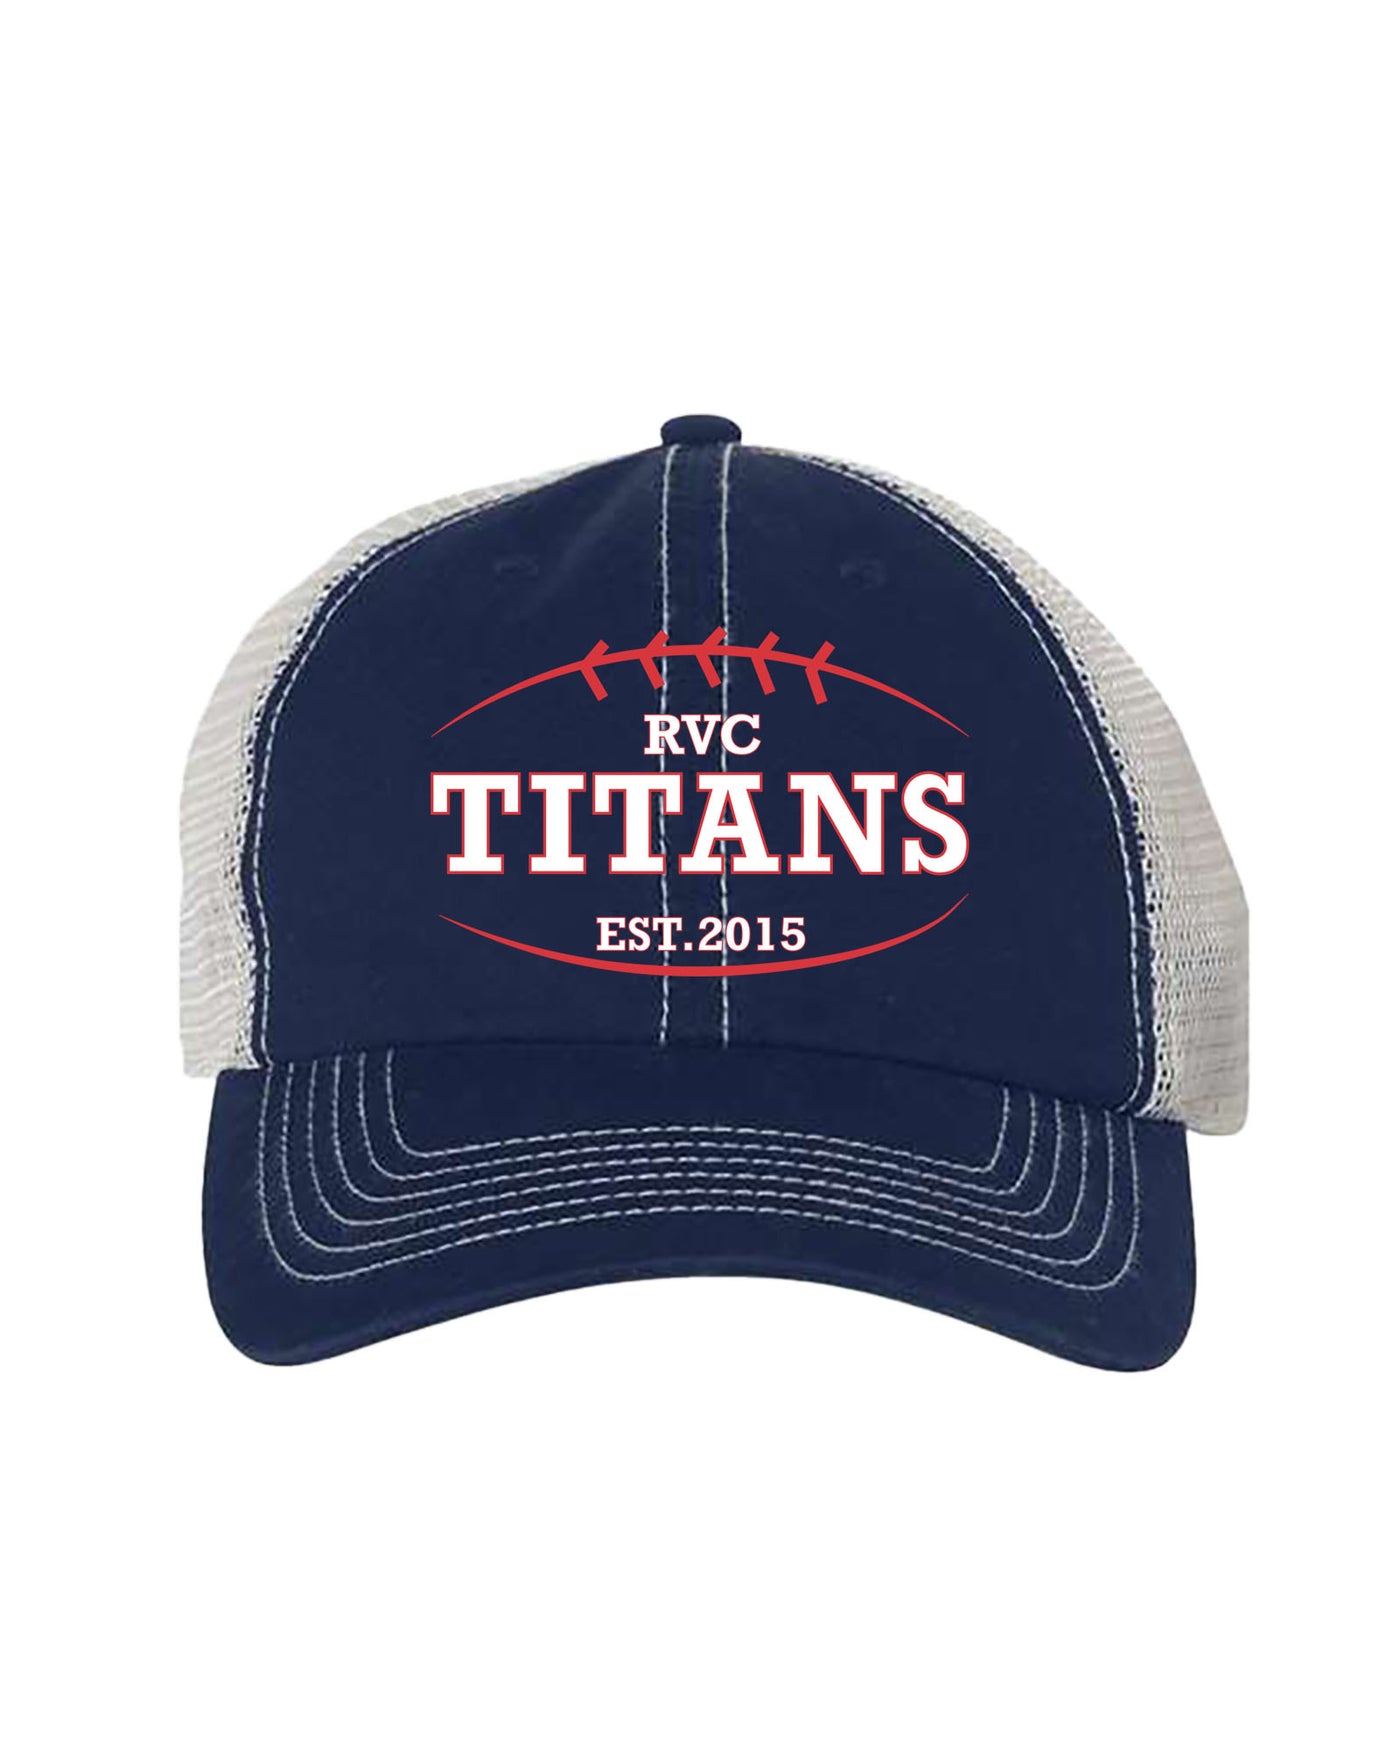 Titans RVC Trawler Hat